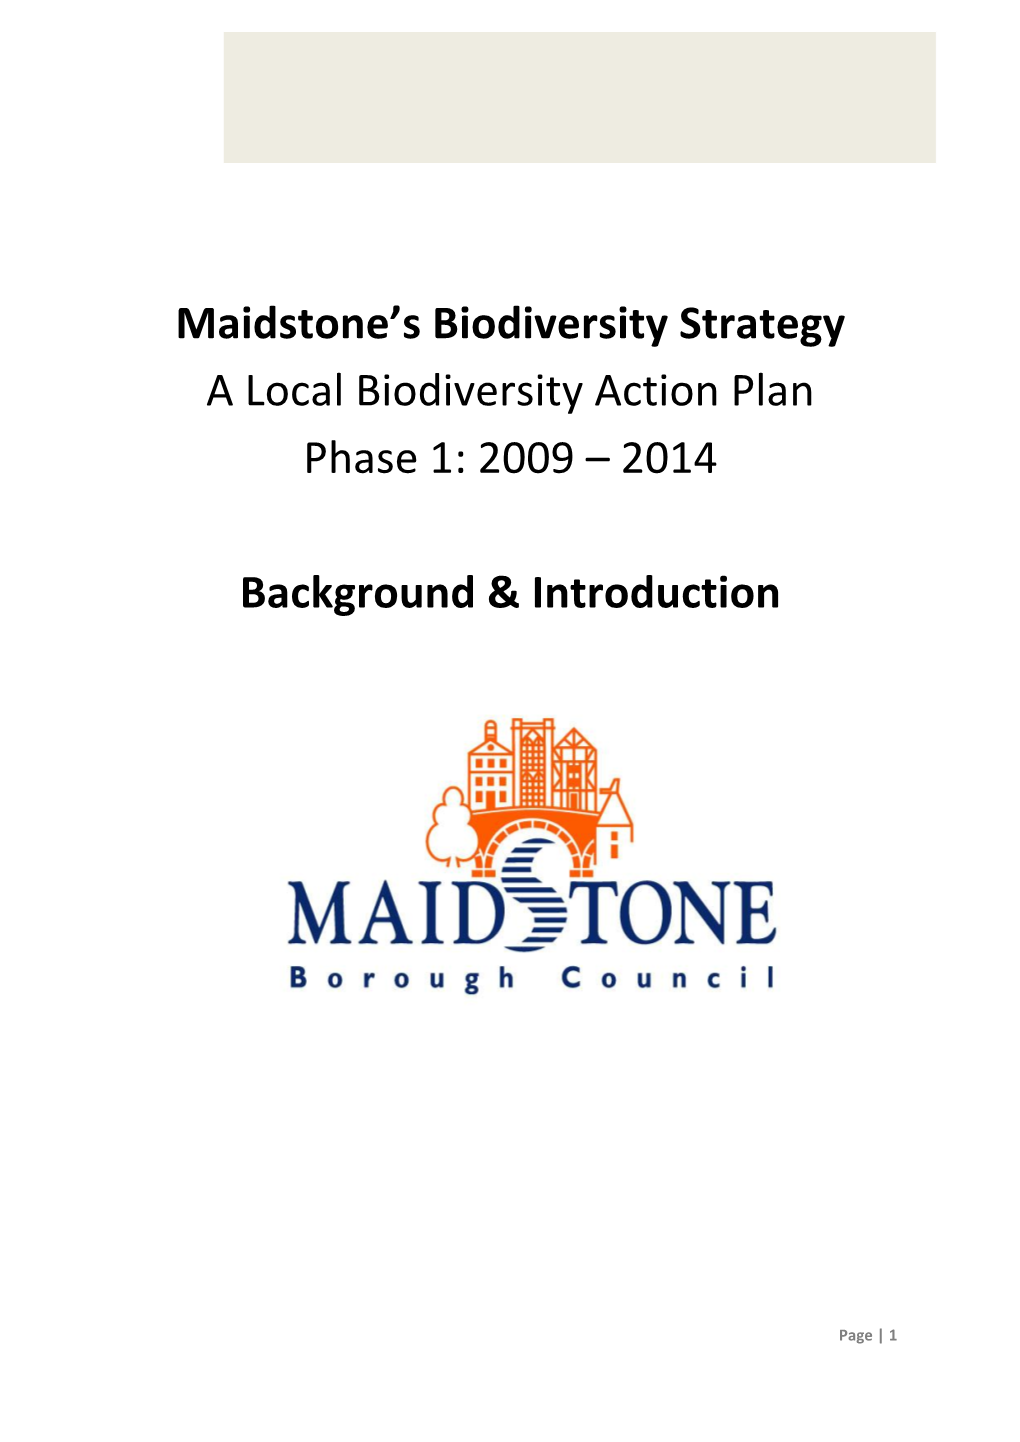 Maidstone's Biodiversity Strategy a Local